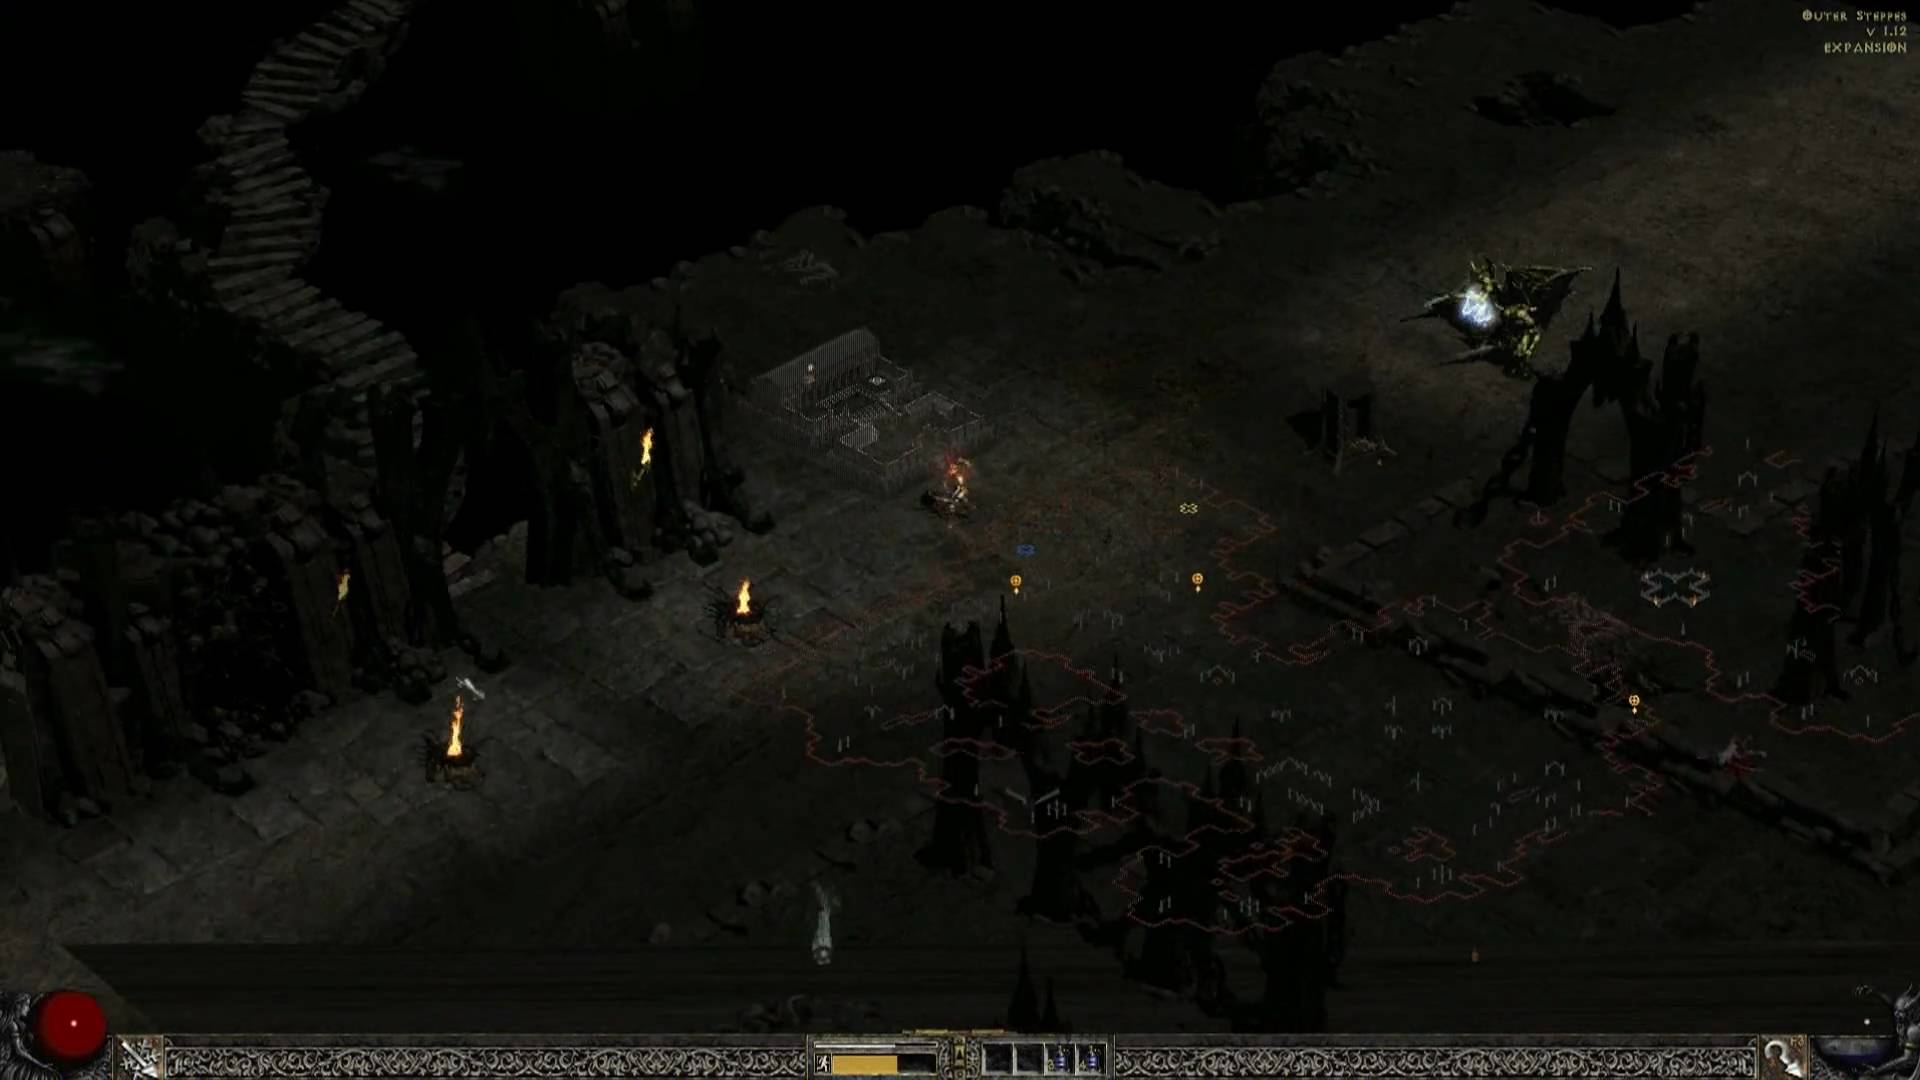 Diablo II HD Wallpaper and Background Image